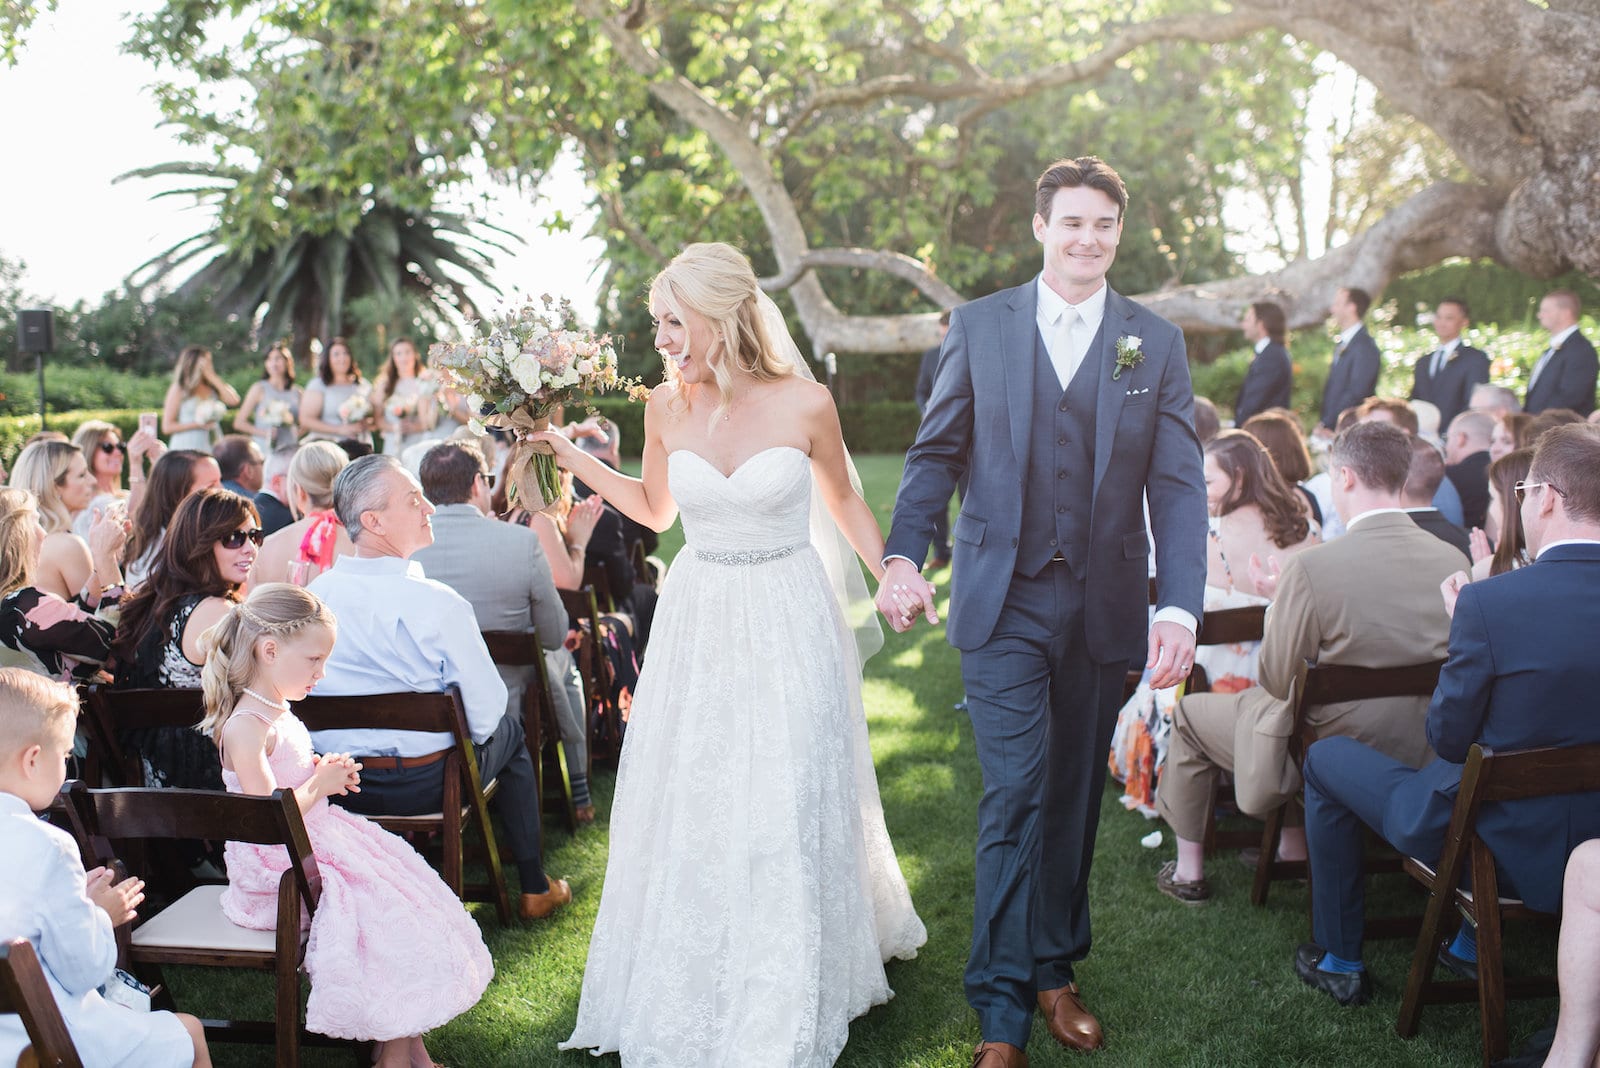 Tiffany & Travis' Wedding at the Adamson House - Events by Tiffany J